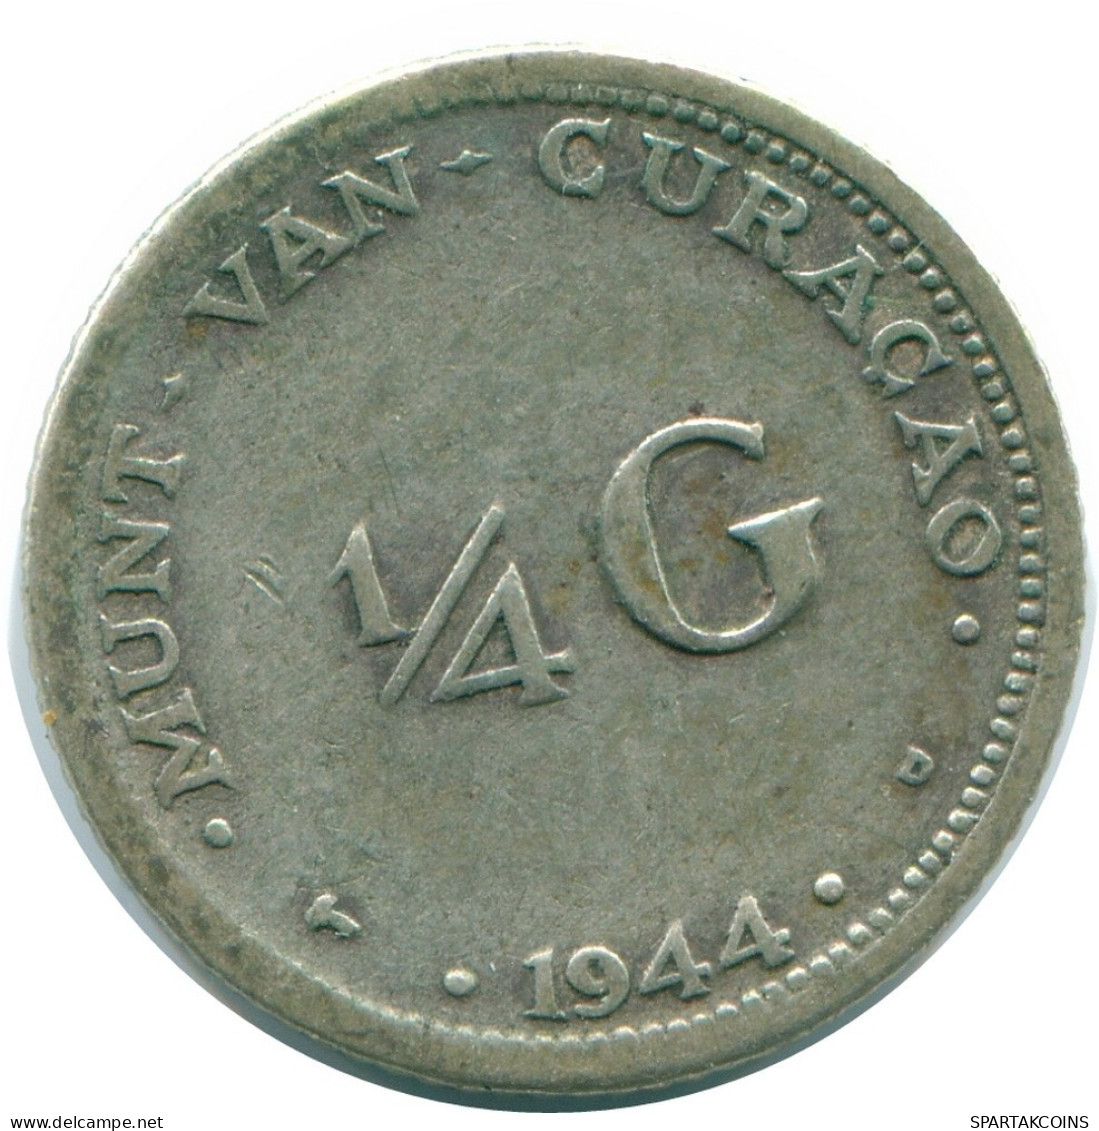 1/4 GULDEN 1944 CURACAO Netherlands SILVER Colonial Coin #NL10662.4.U.A - Curacao